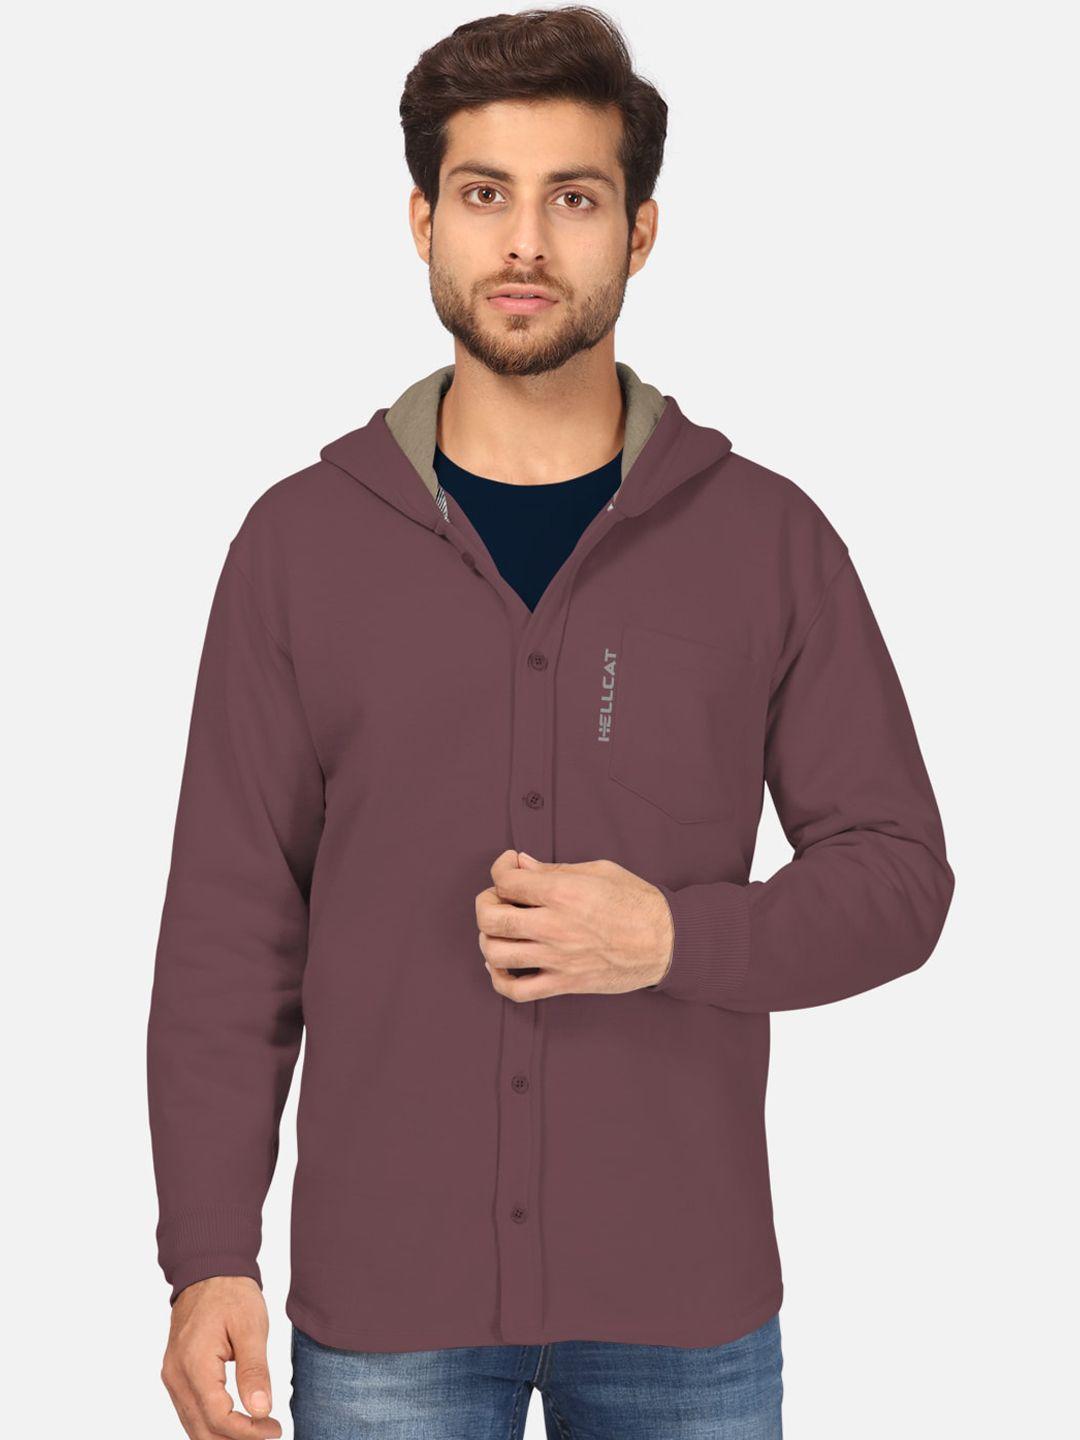 bullmer men burgundy hooded sweatshirt